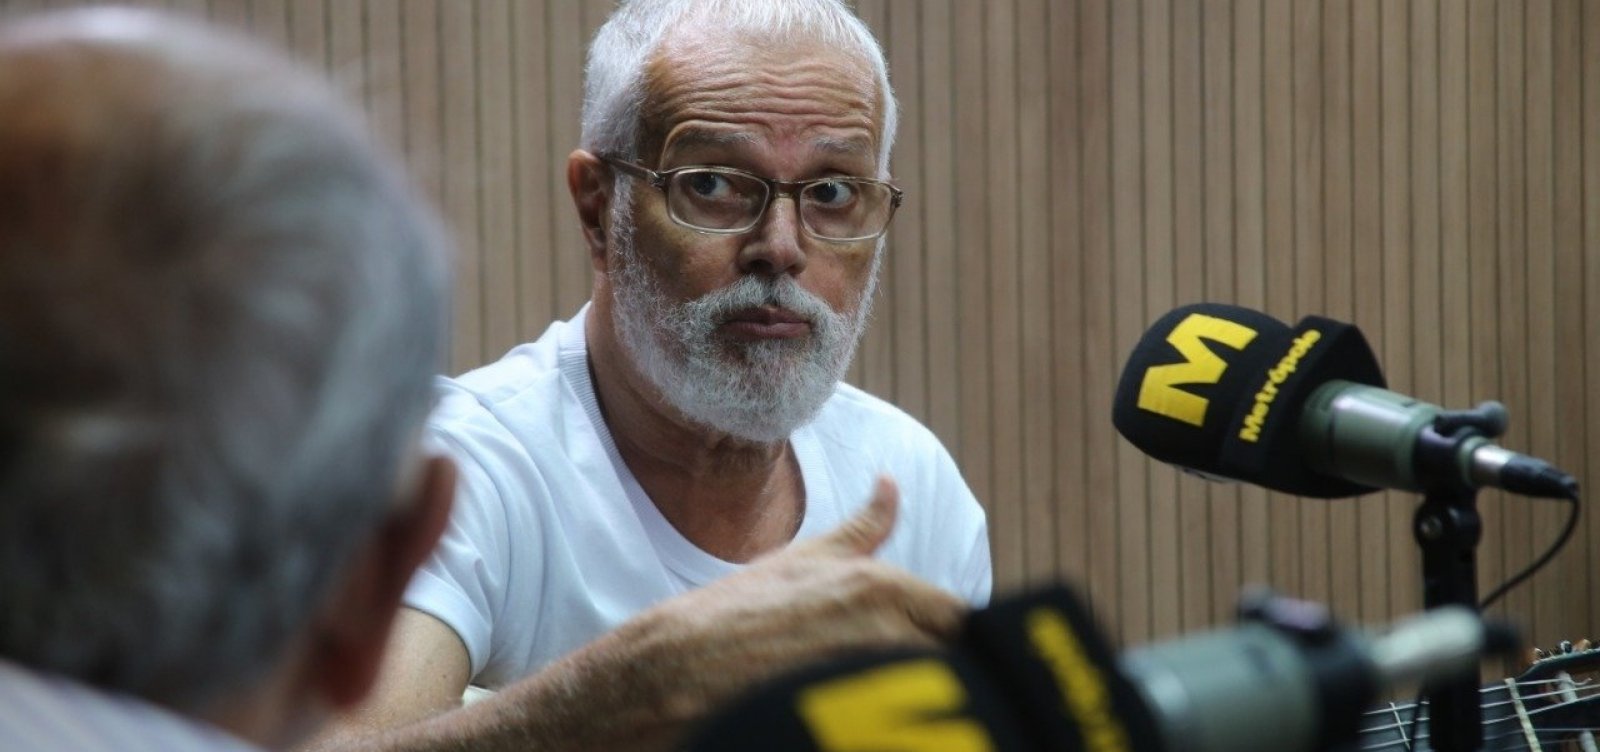 Roberto Mendes lamenta ataque a igreja de Santo Amaro: 'Jogaram (óleo) na nossa alma'